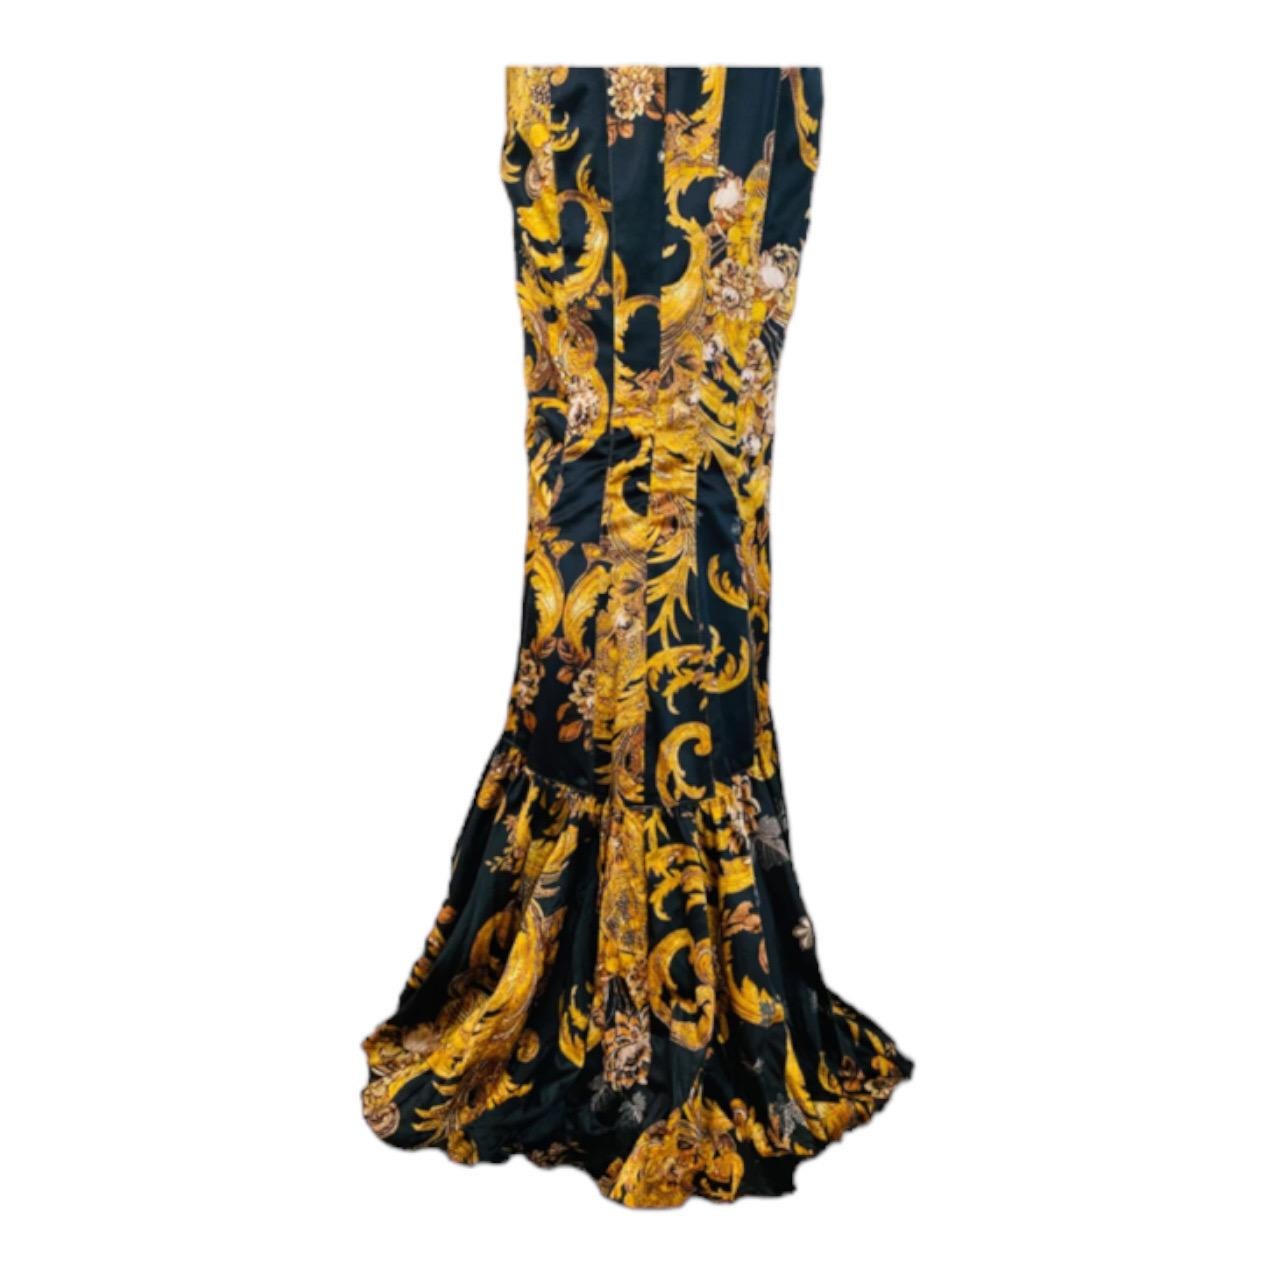 Vintage 2000s Y2K Just Cavalli Roberto Cavalli Black Gold Baroque Dress Gown For Sale 5